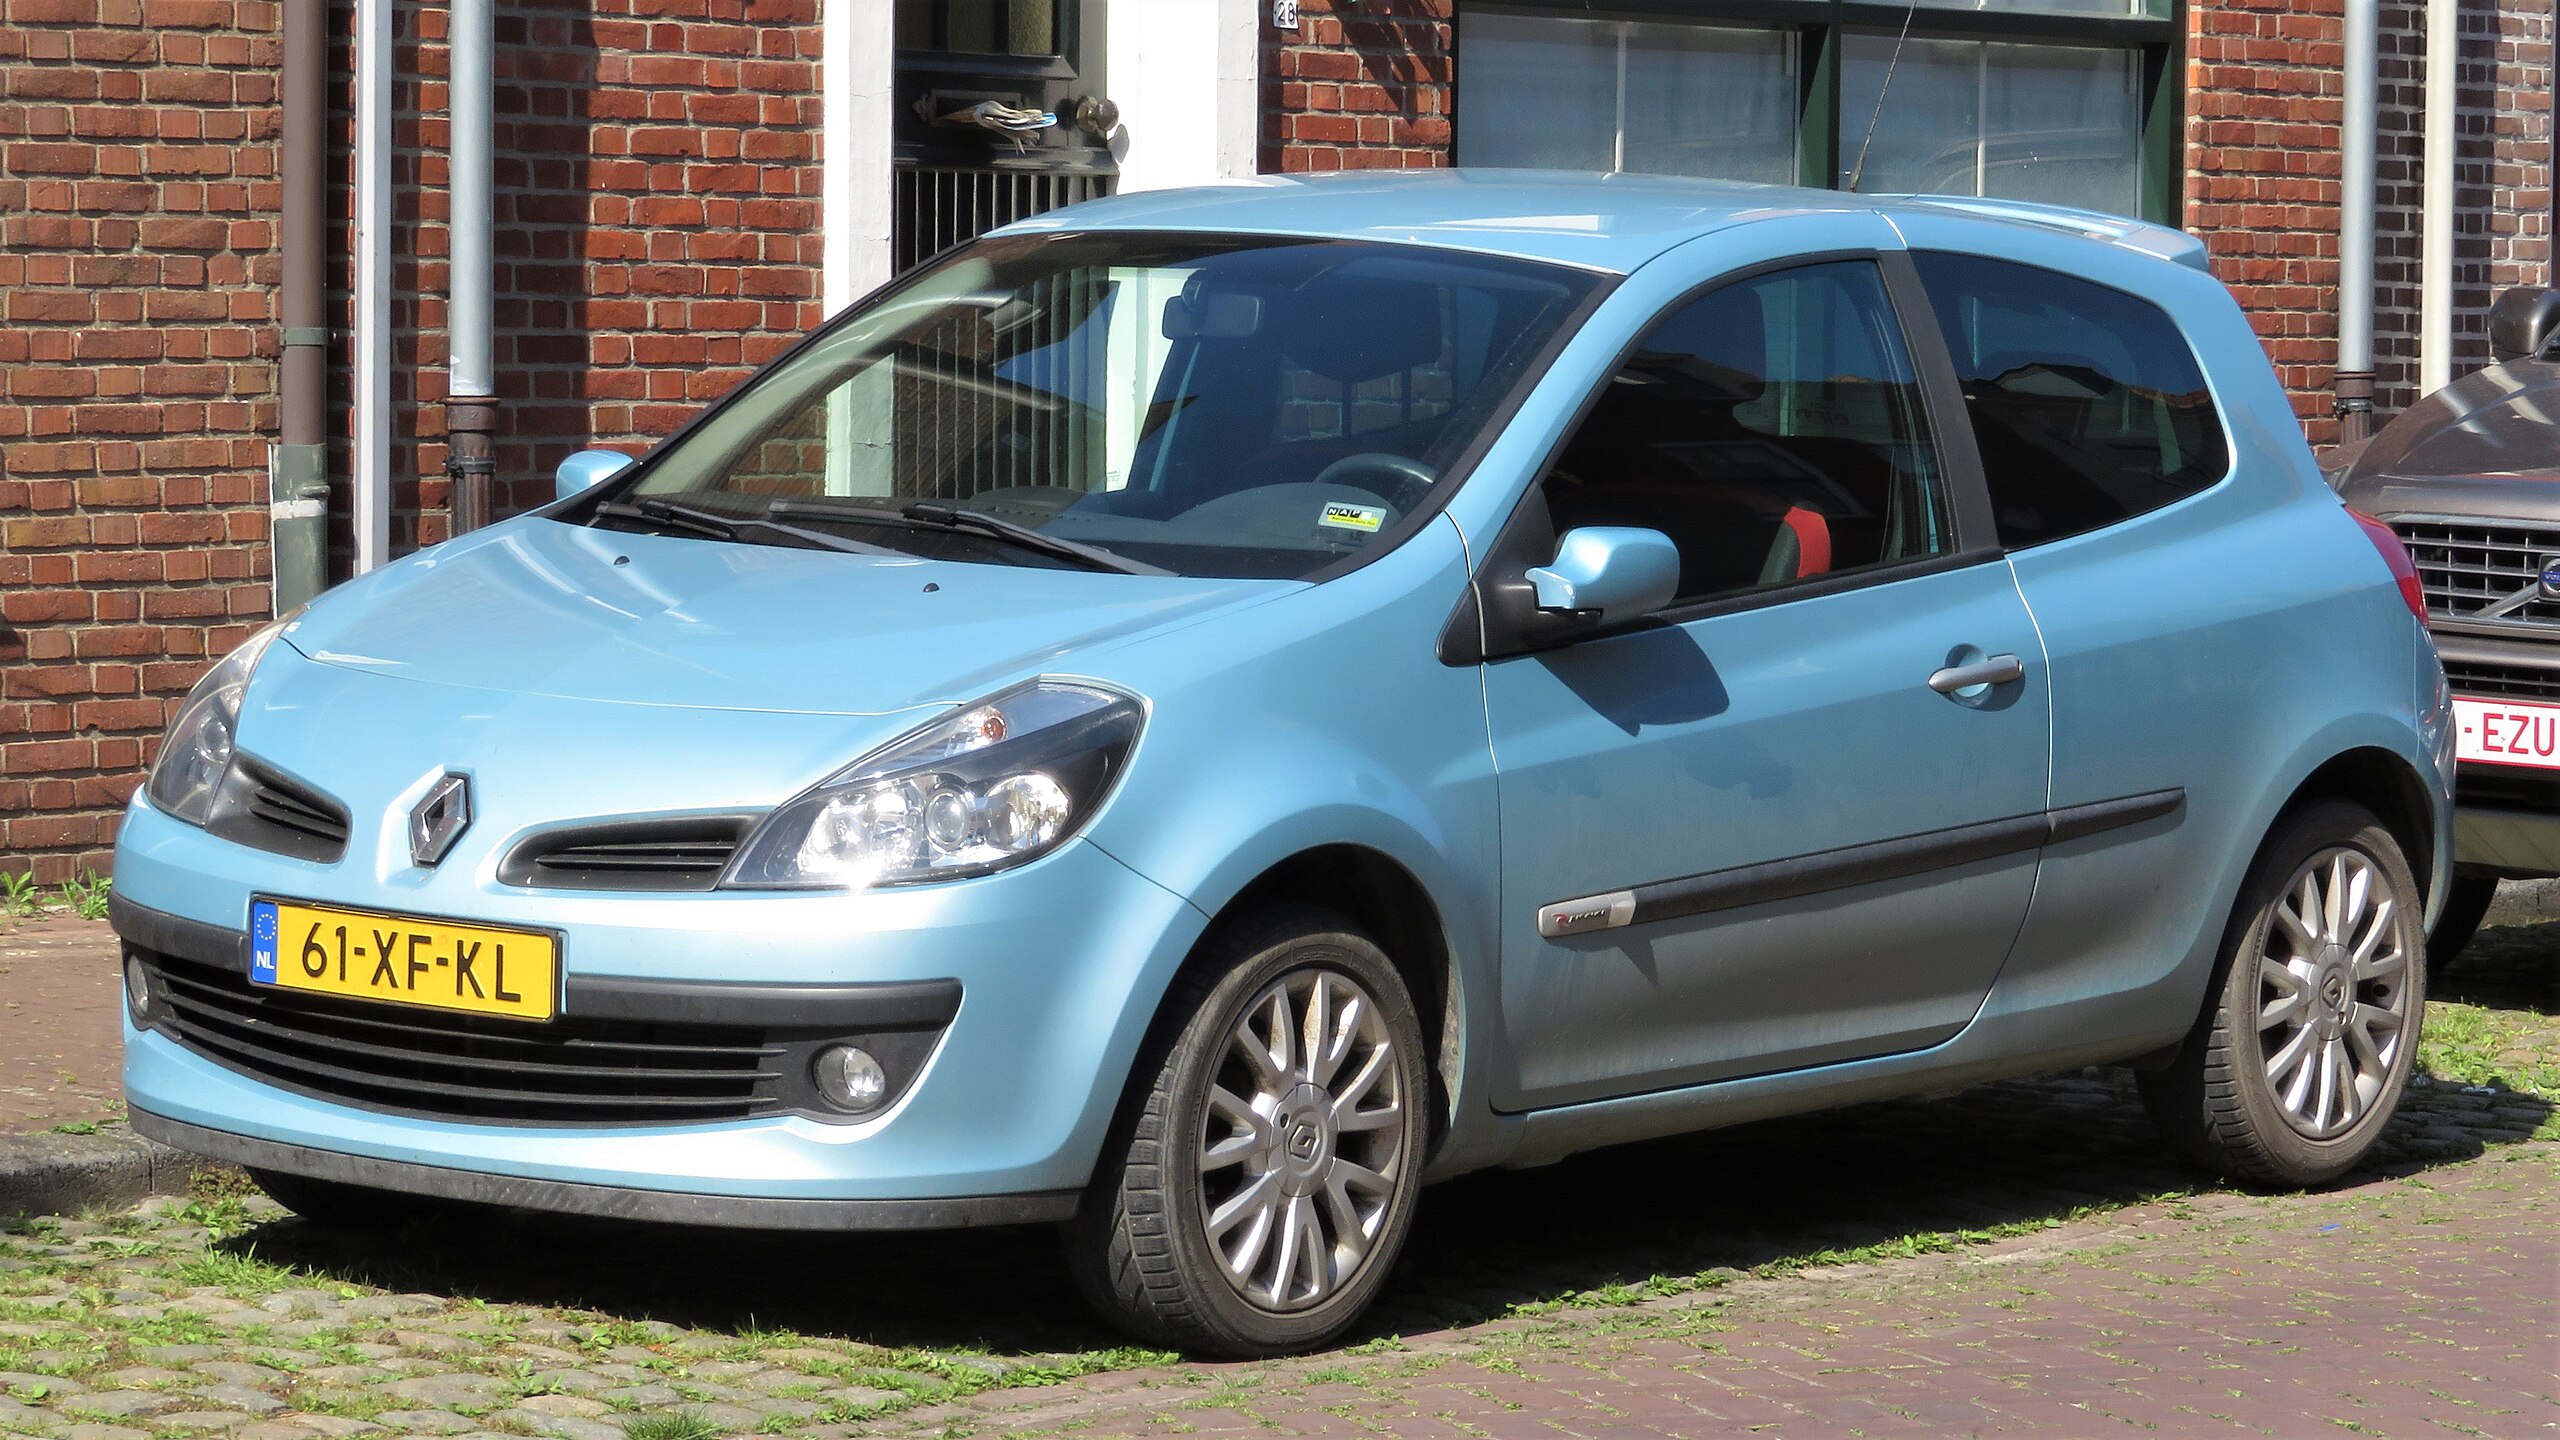 File:Renault Twingo III in Aardenburg.jpg - Wikimedia Commons